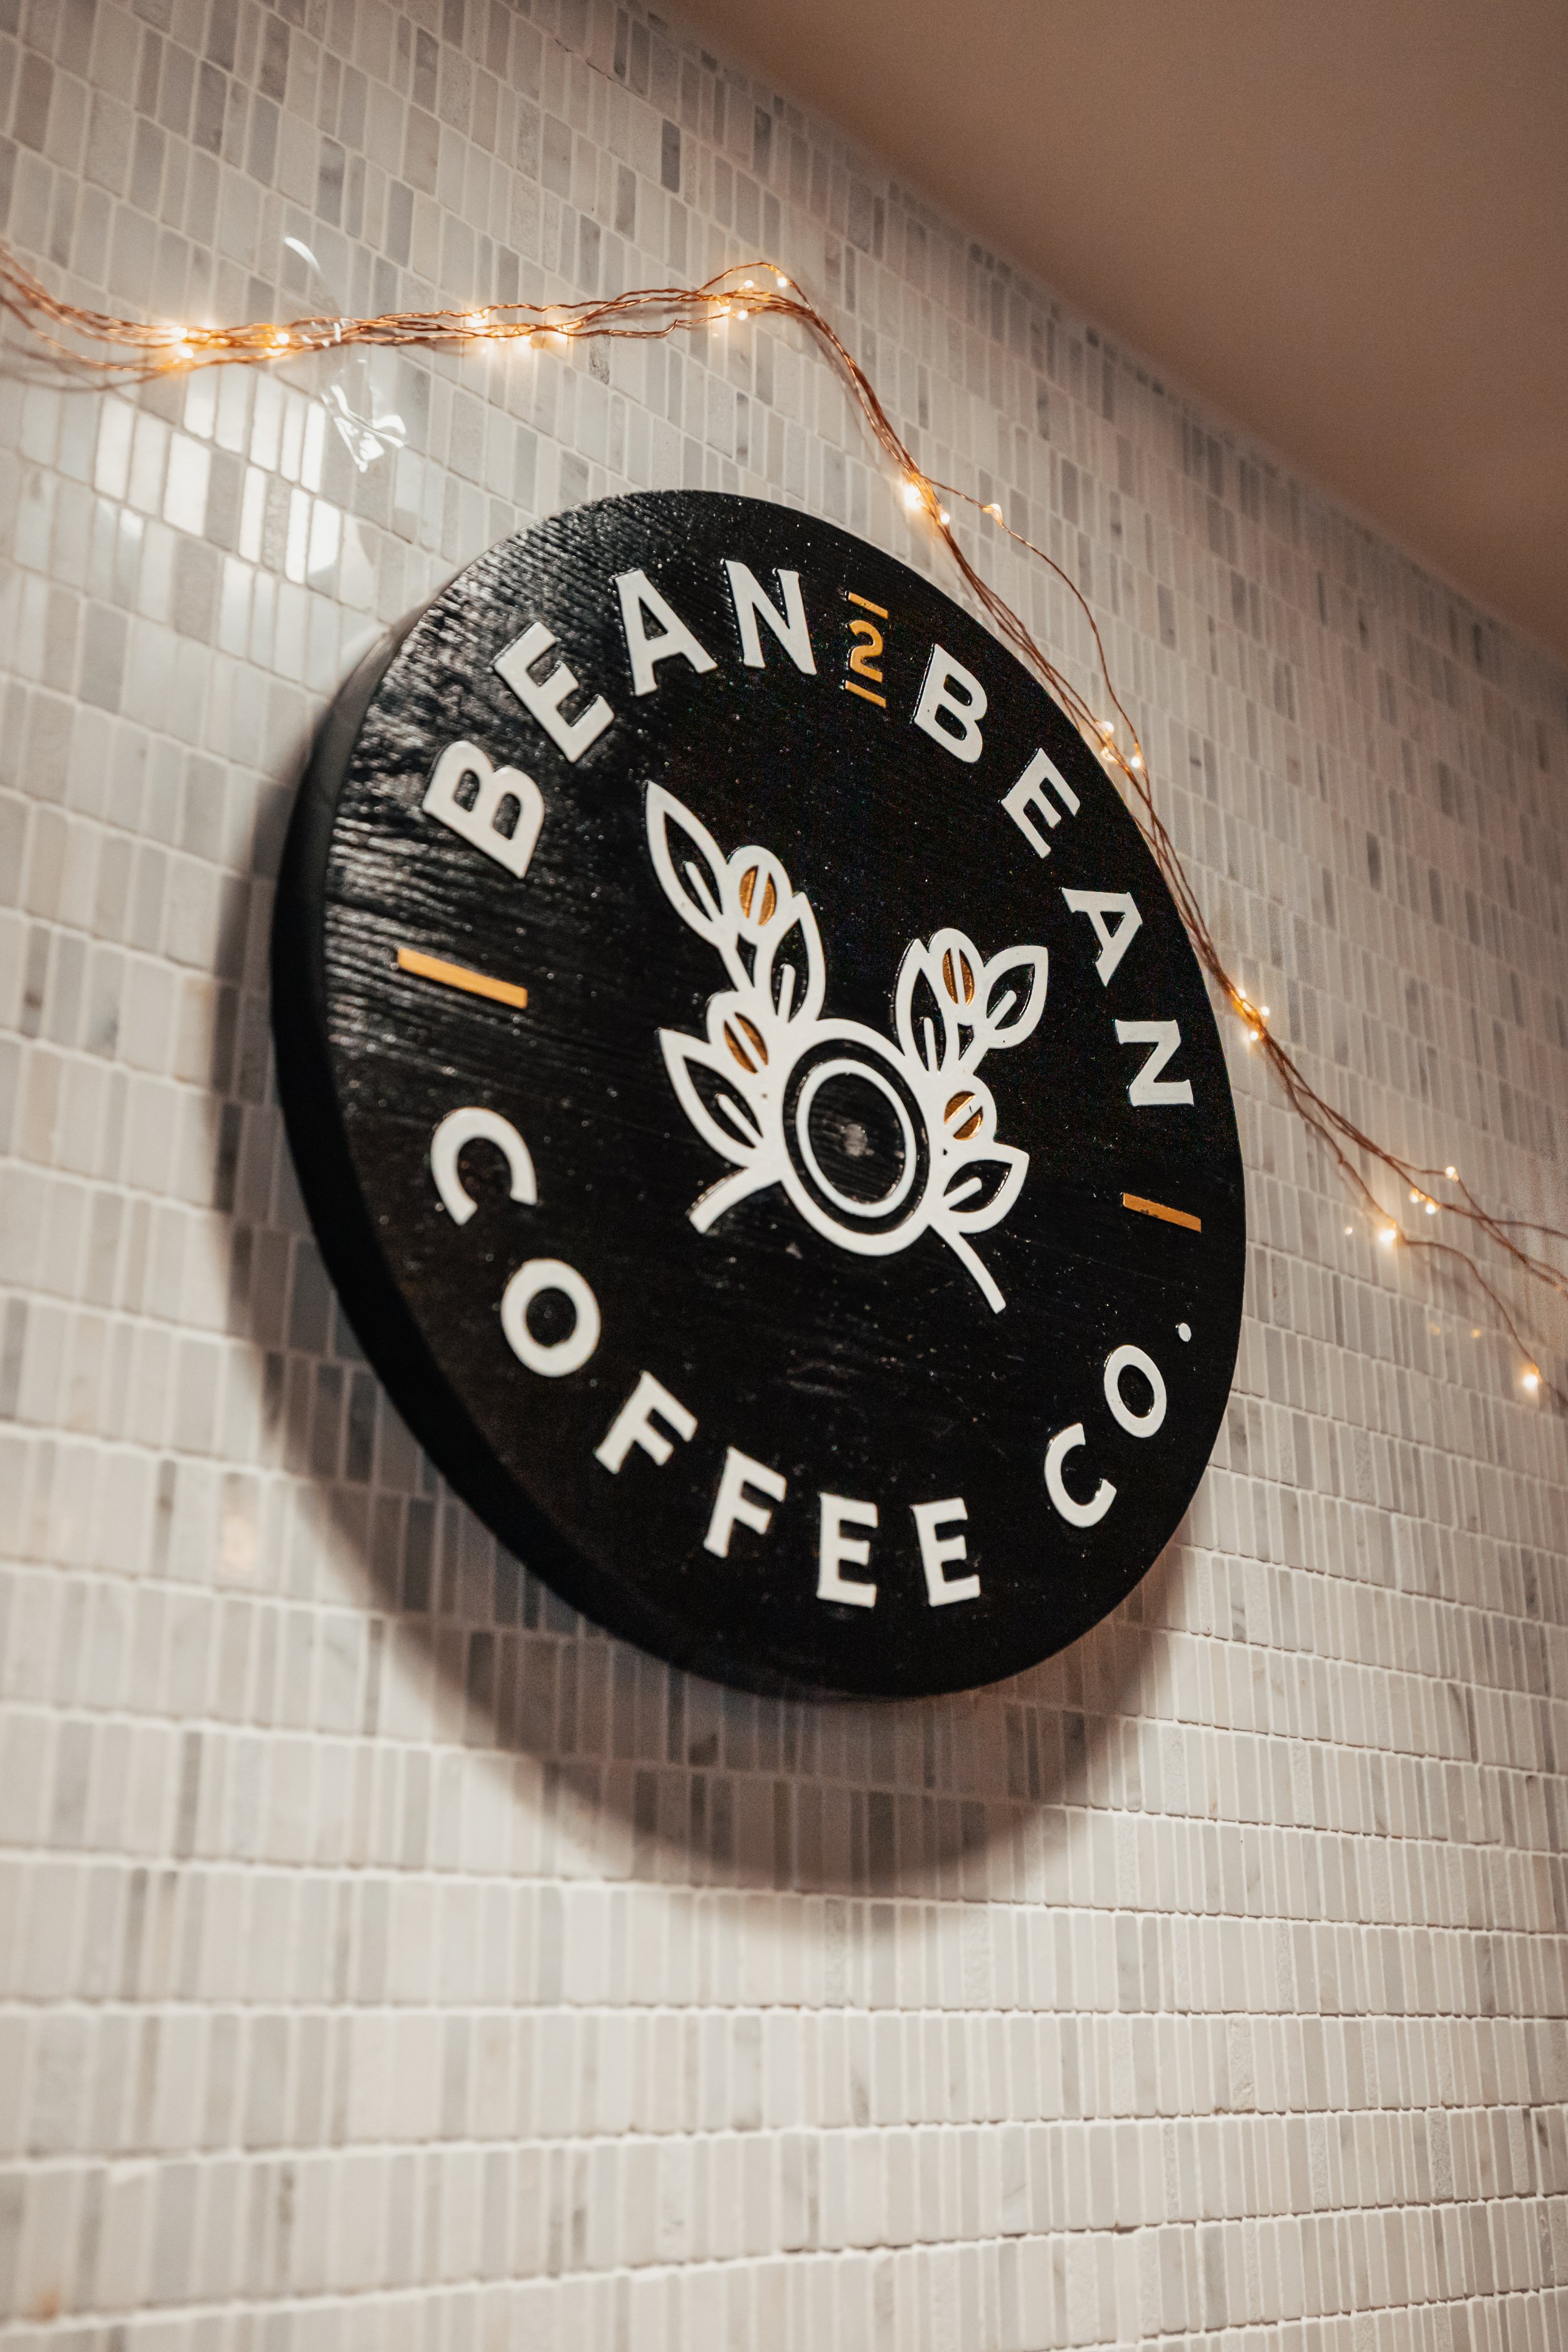 Industrious-Bean2Bean_Coffee_Co-Philadelphia